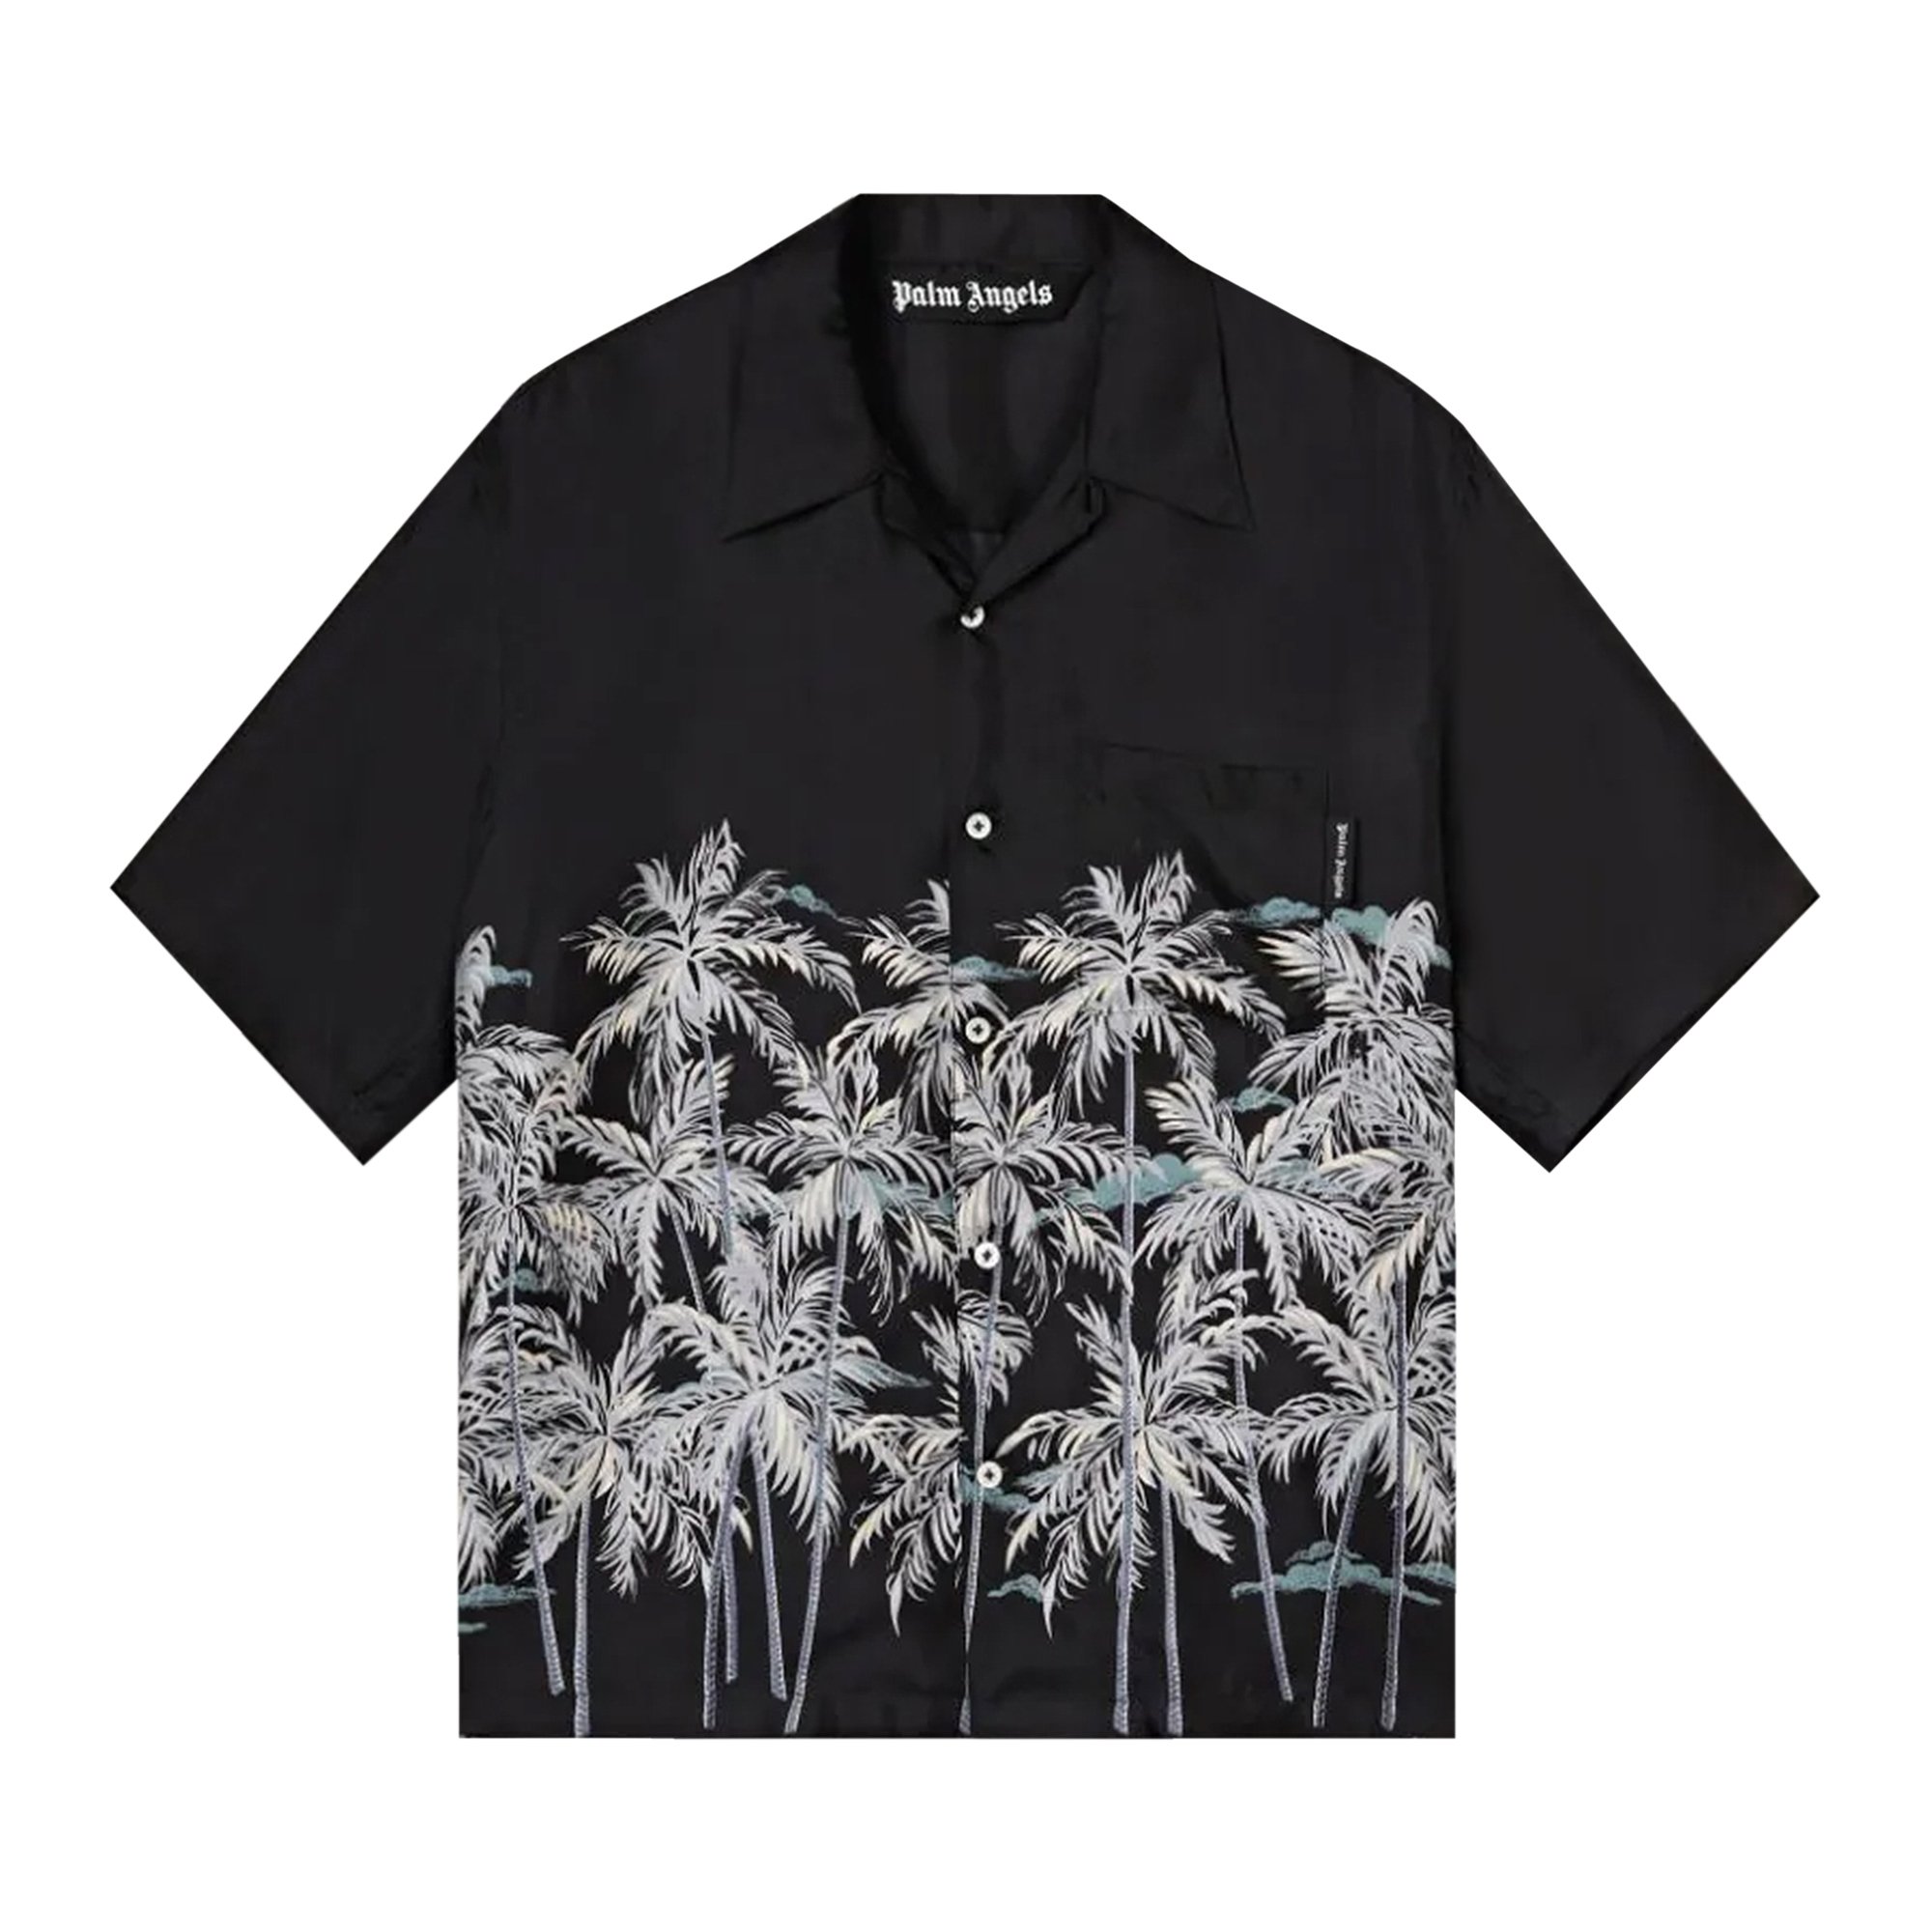 Palm Angels Allover Palms Bowling Shirt 'Black/White'